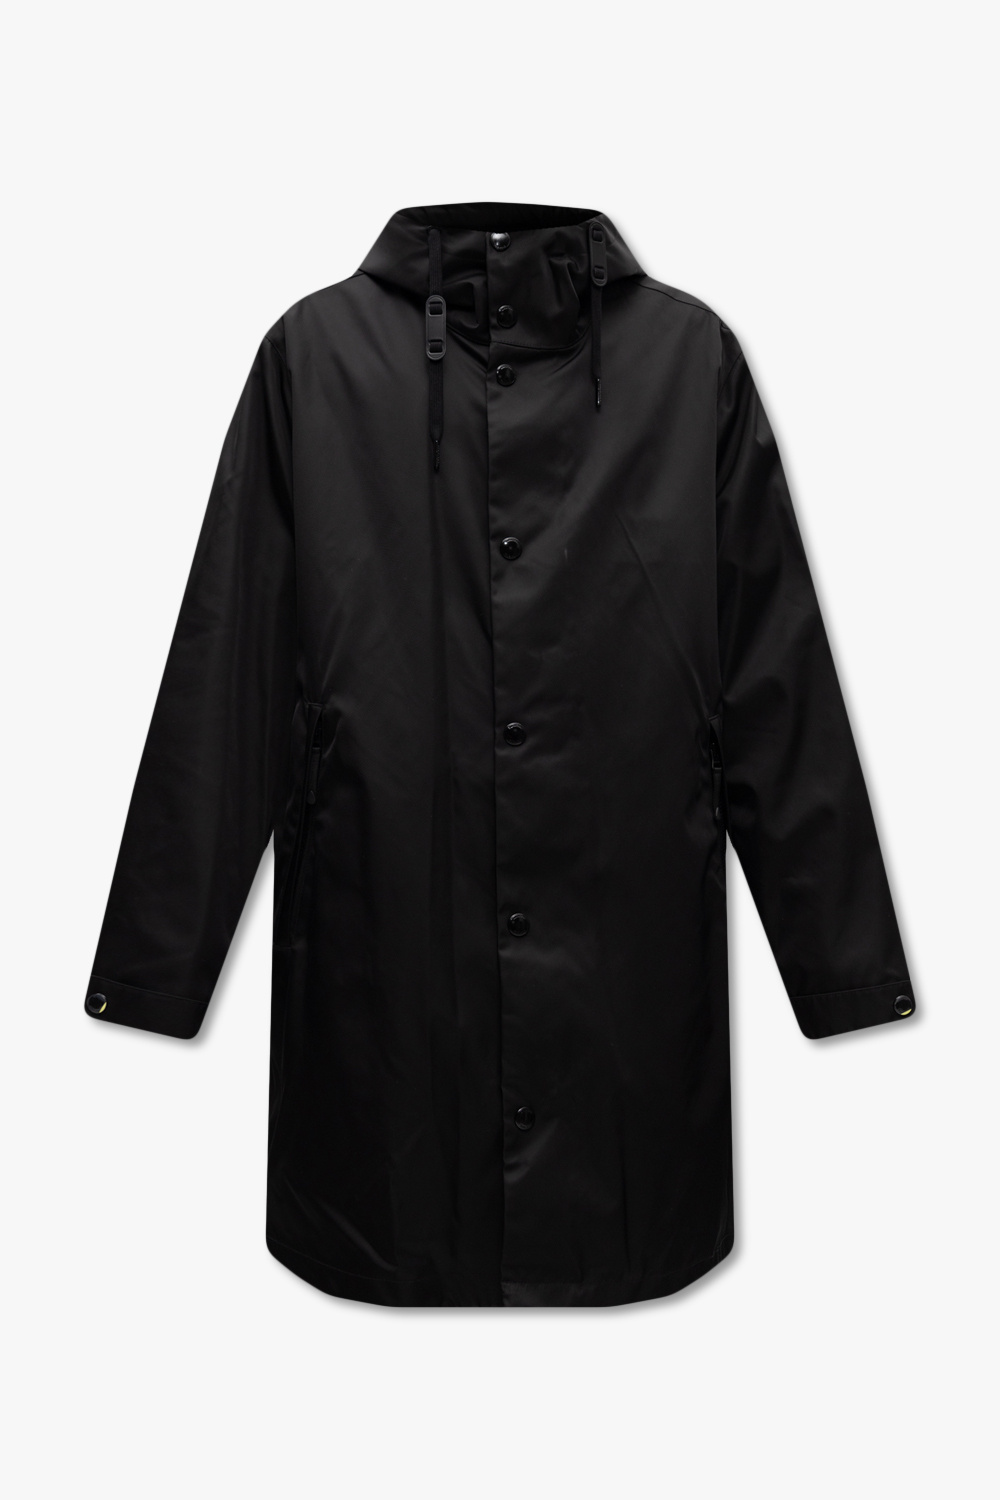 Burberry ‘Anderton’ hooded jacket